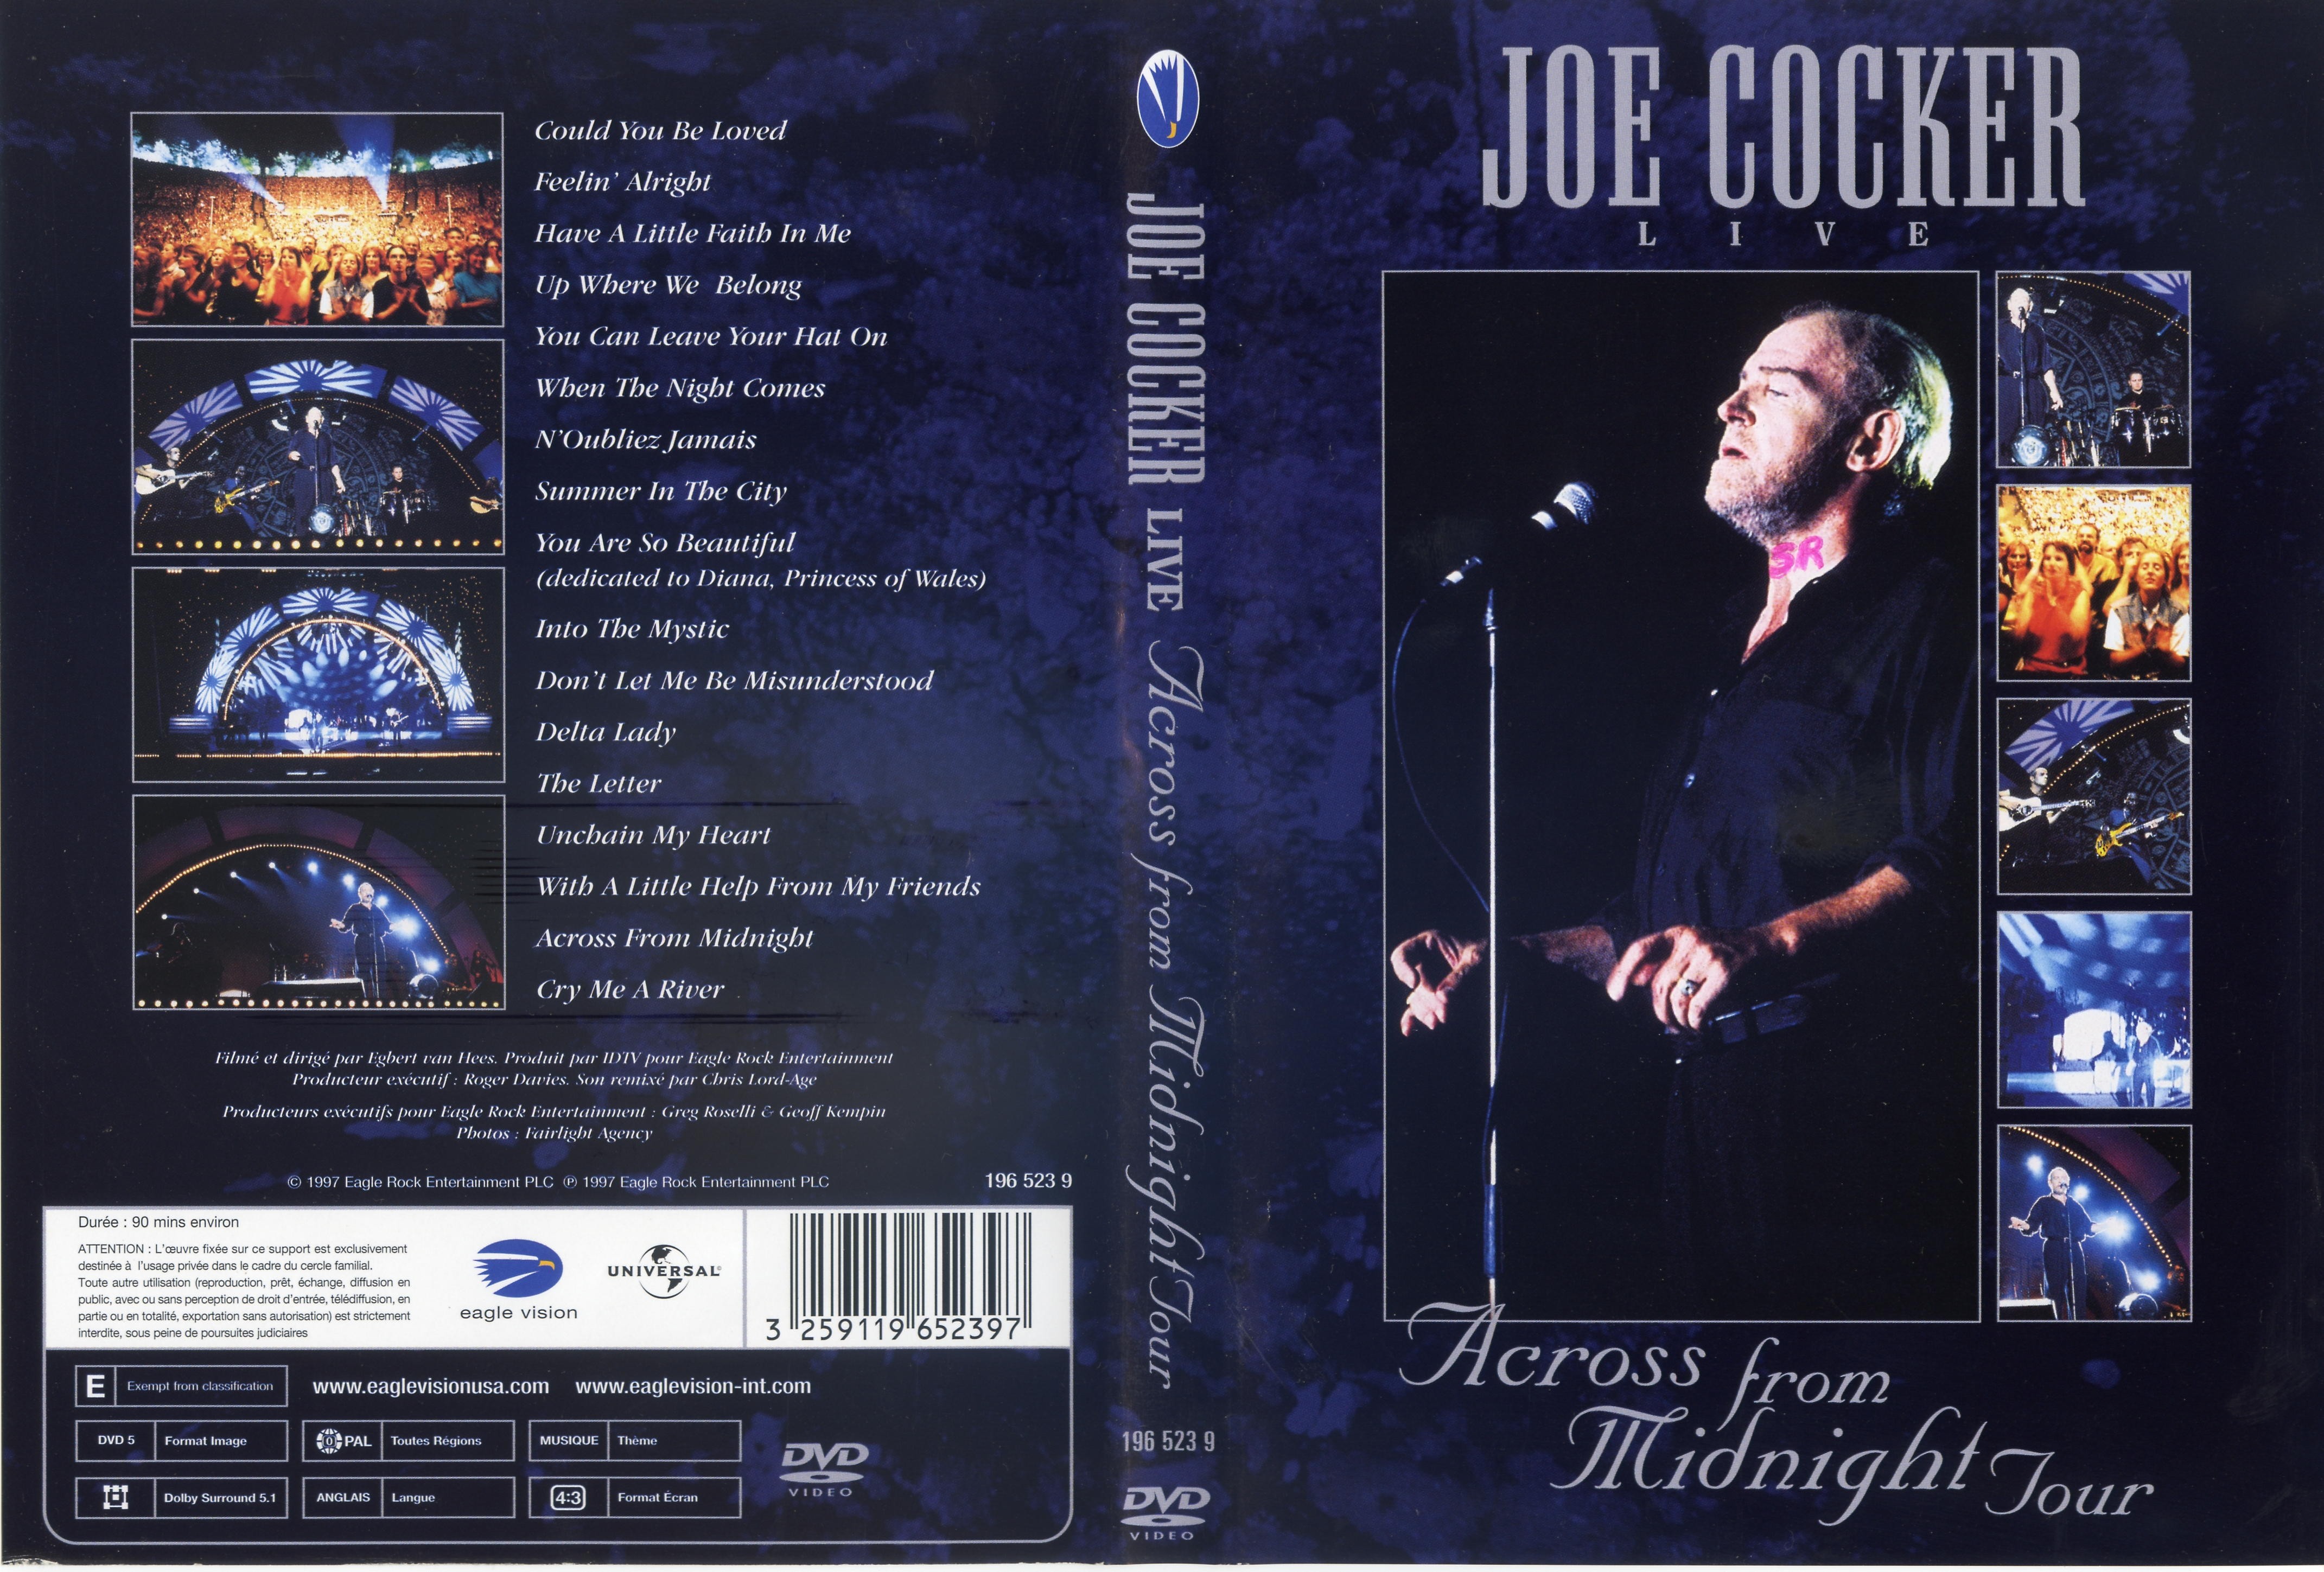 Jaquette DVD Joe Cocker Across from midnight hour